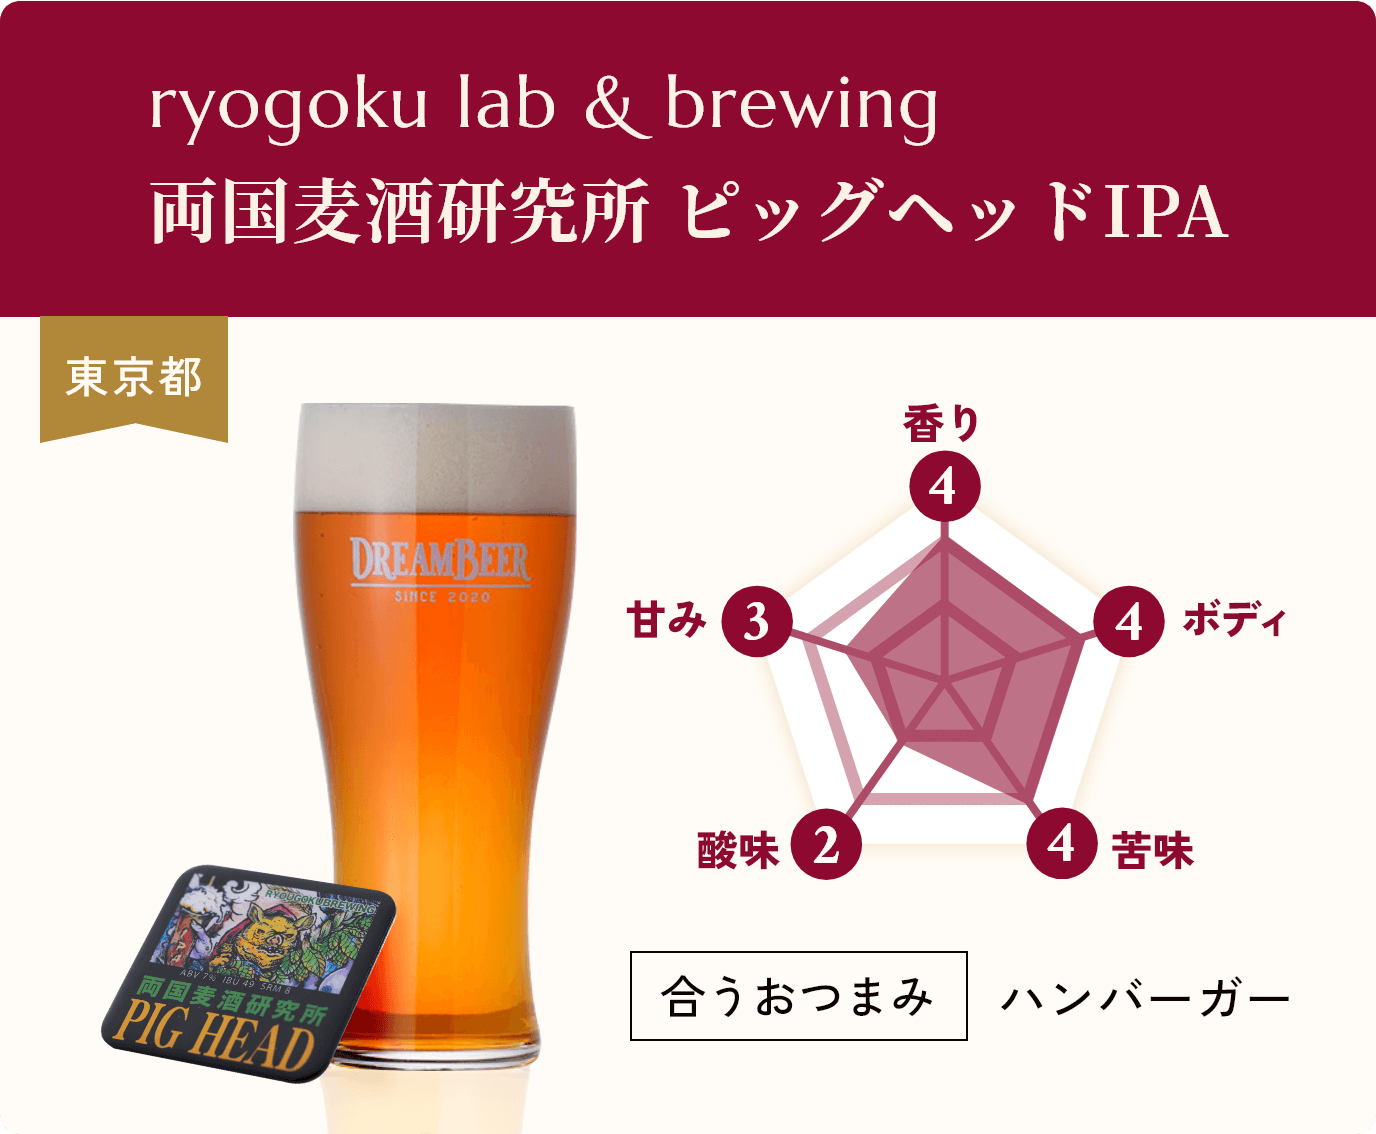 ryogoku lab & brewing,両国麦酒研究所 ピッグヘッドIPA